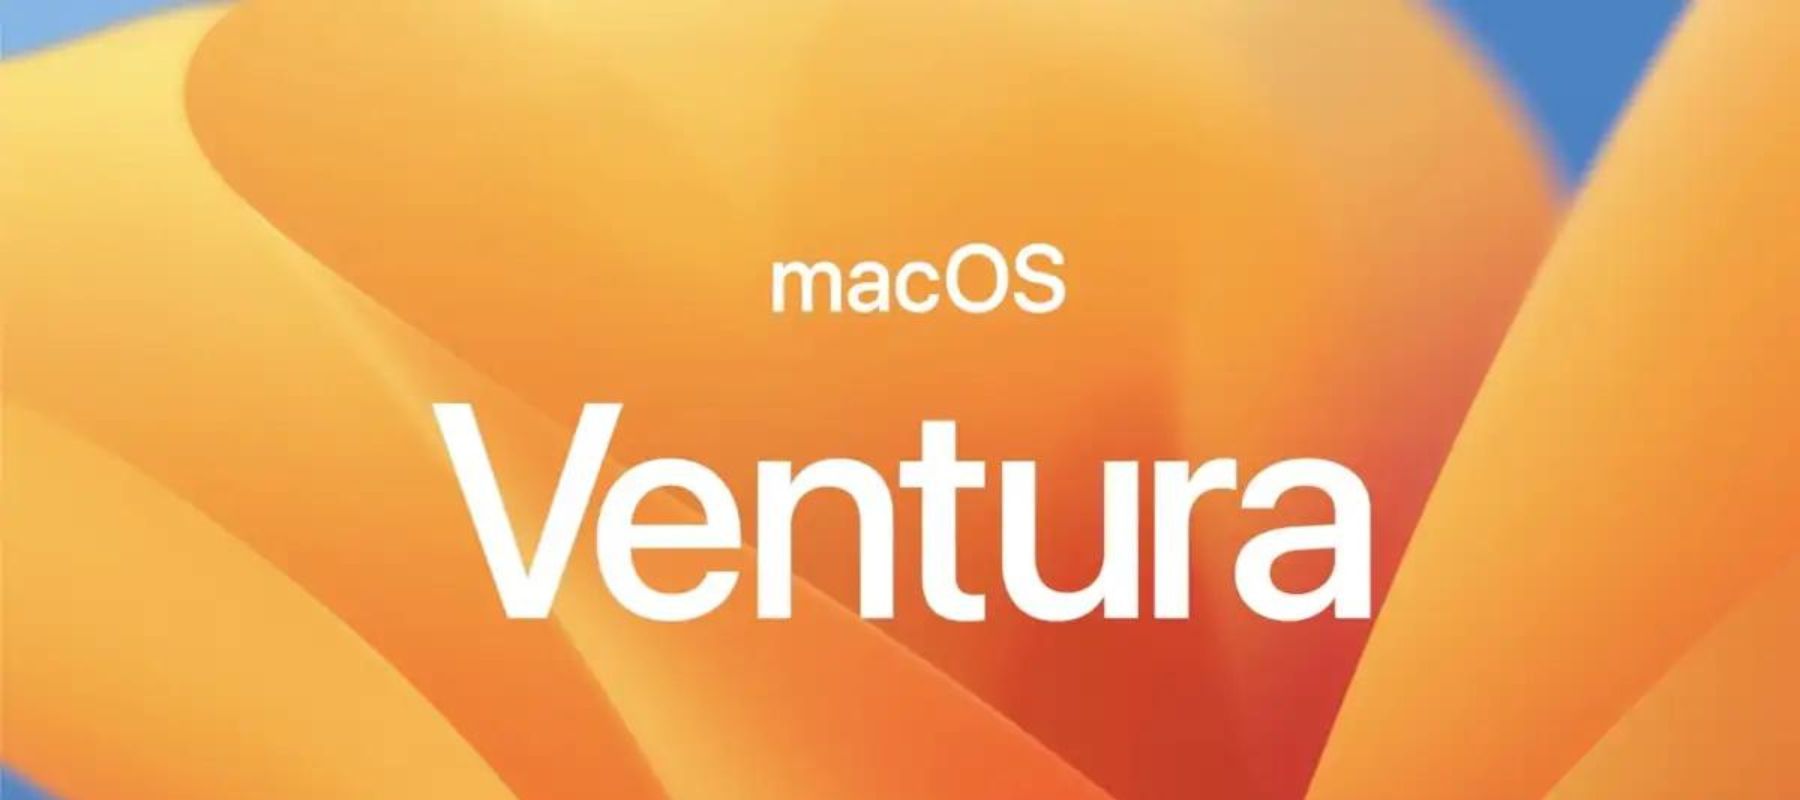 Utilidades de MacOS Ventura para empresa